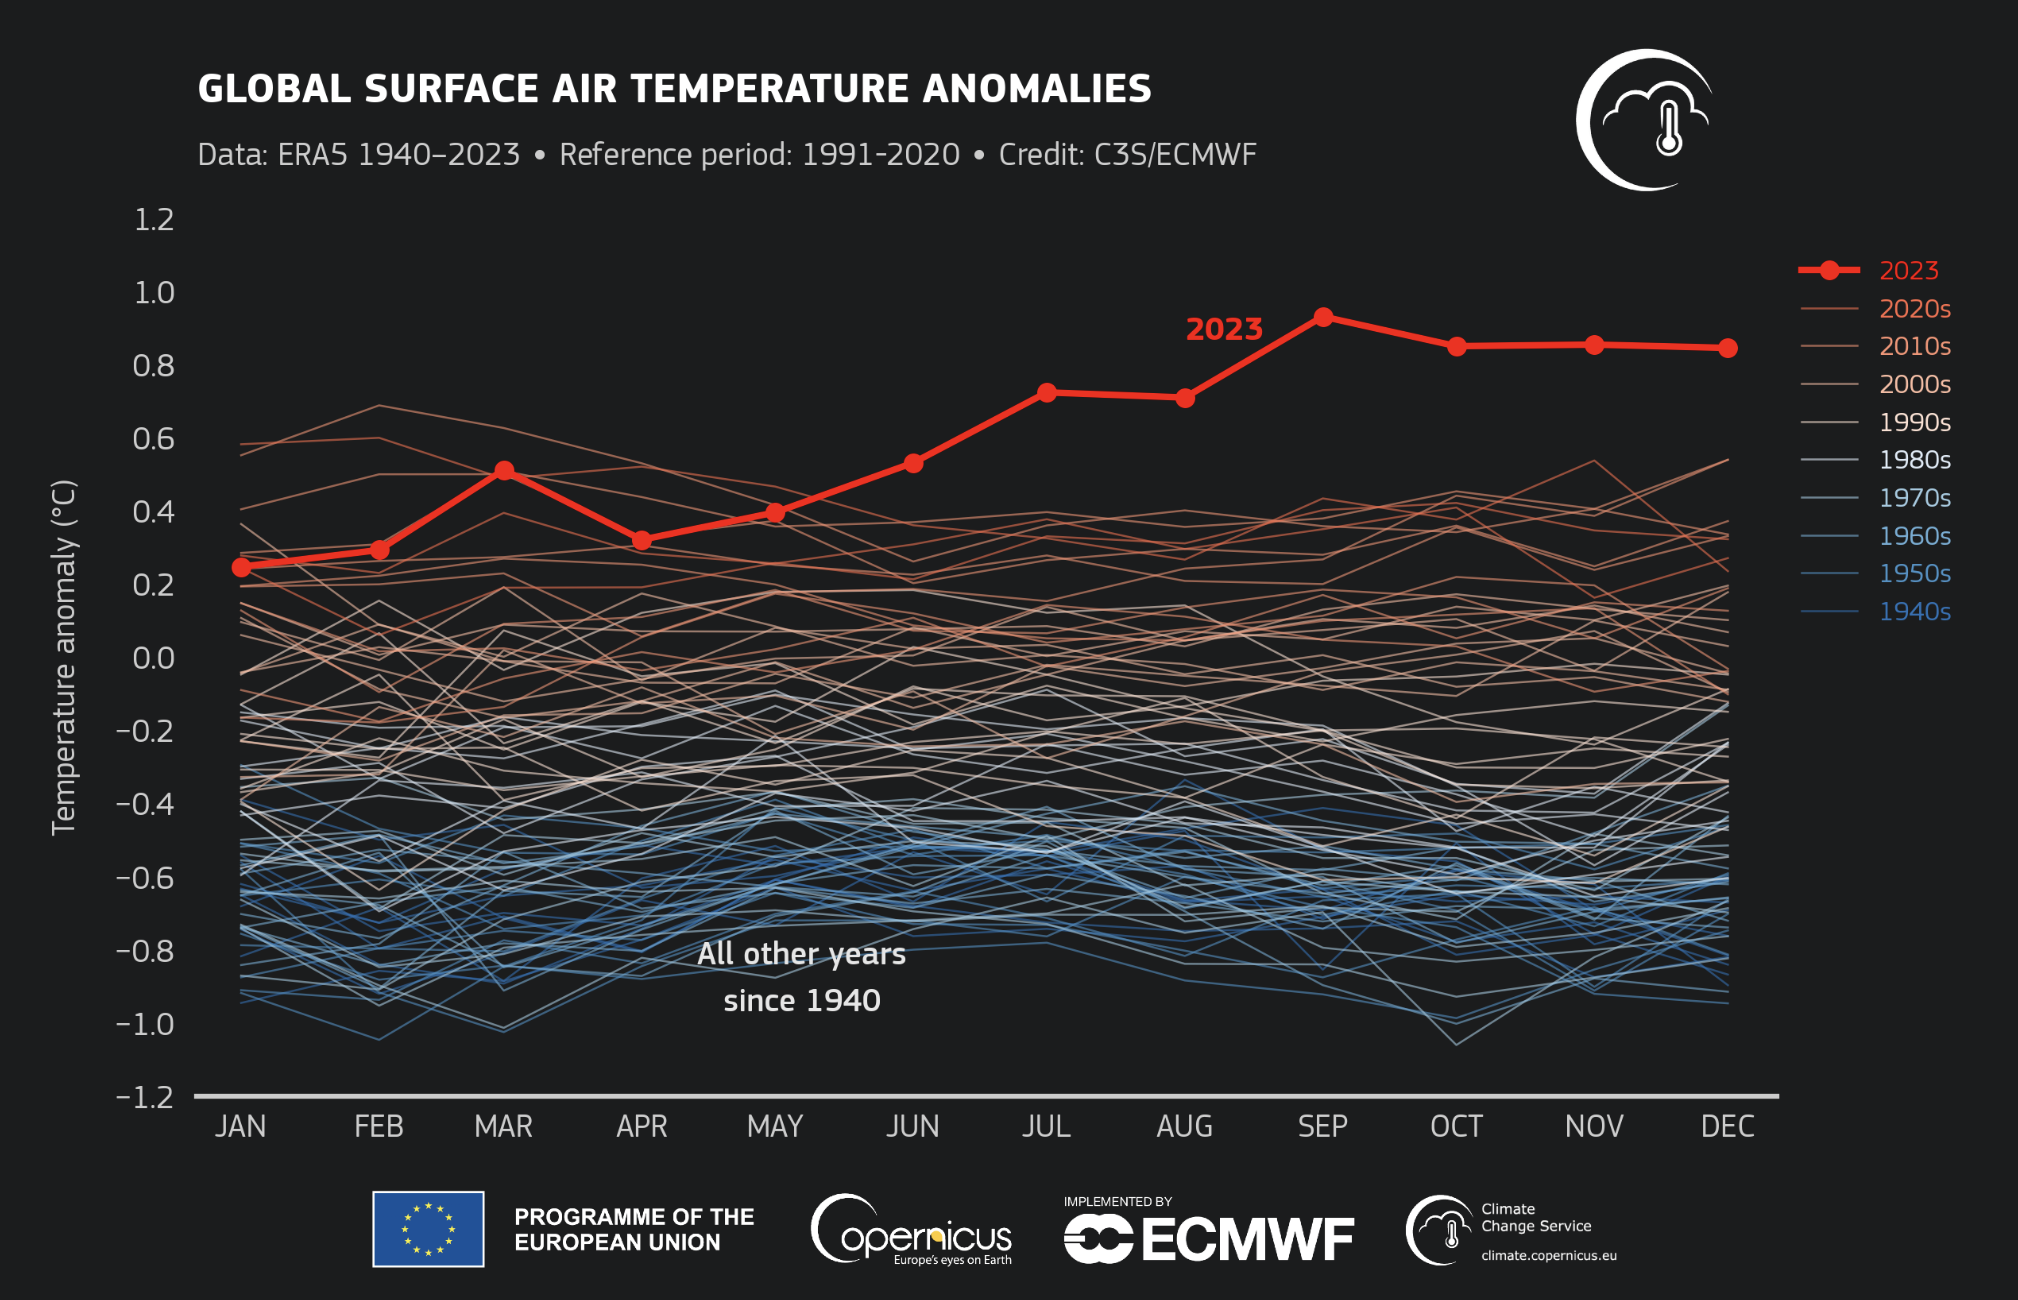 Global temperature anomalies